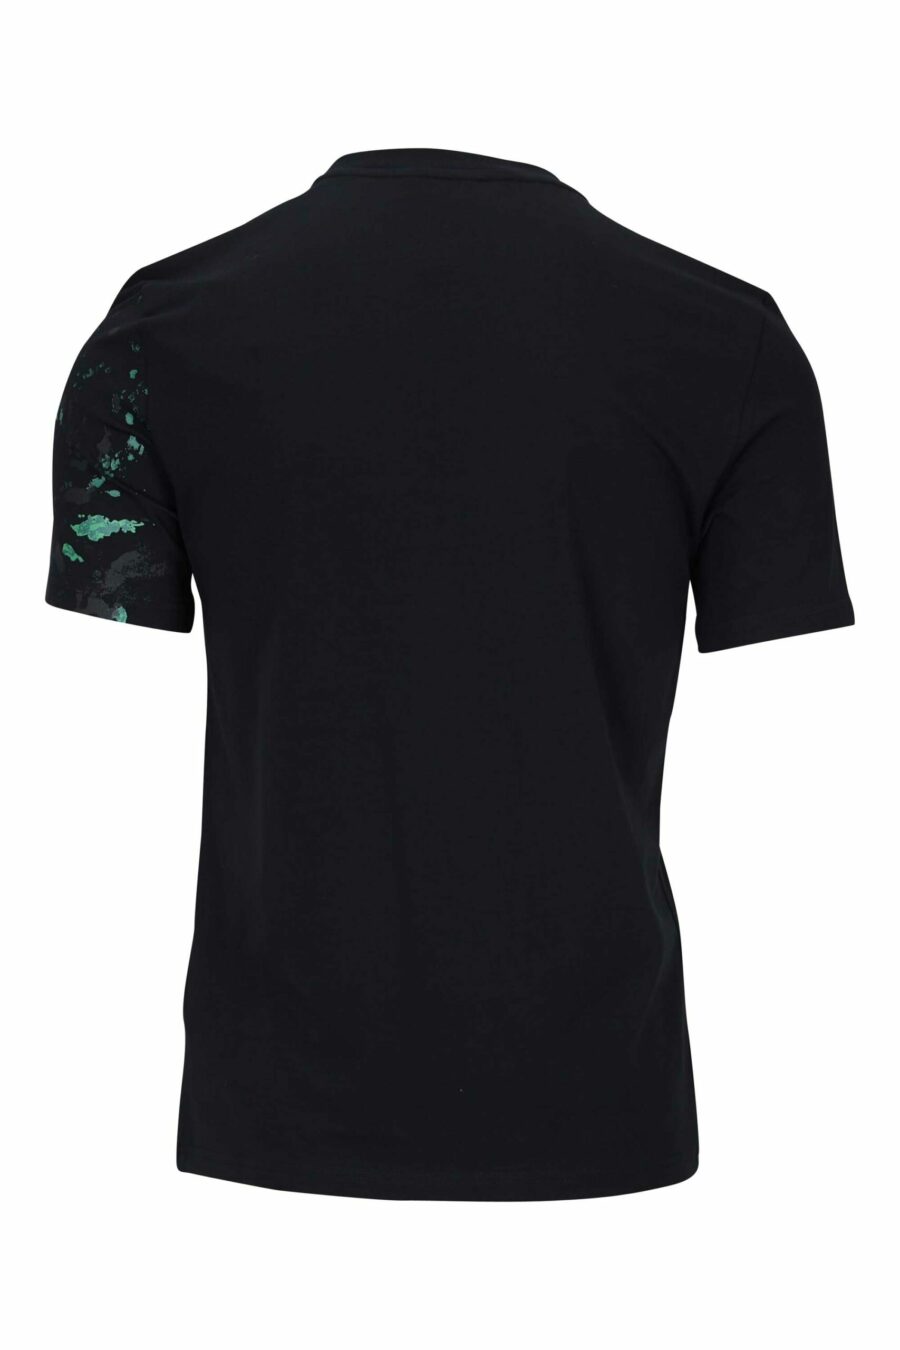 T-shirt preta com minilogo "couture milano" com "splash" multicolorido - 667113392721 1 scaled